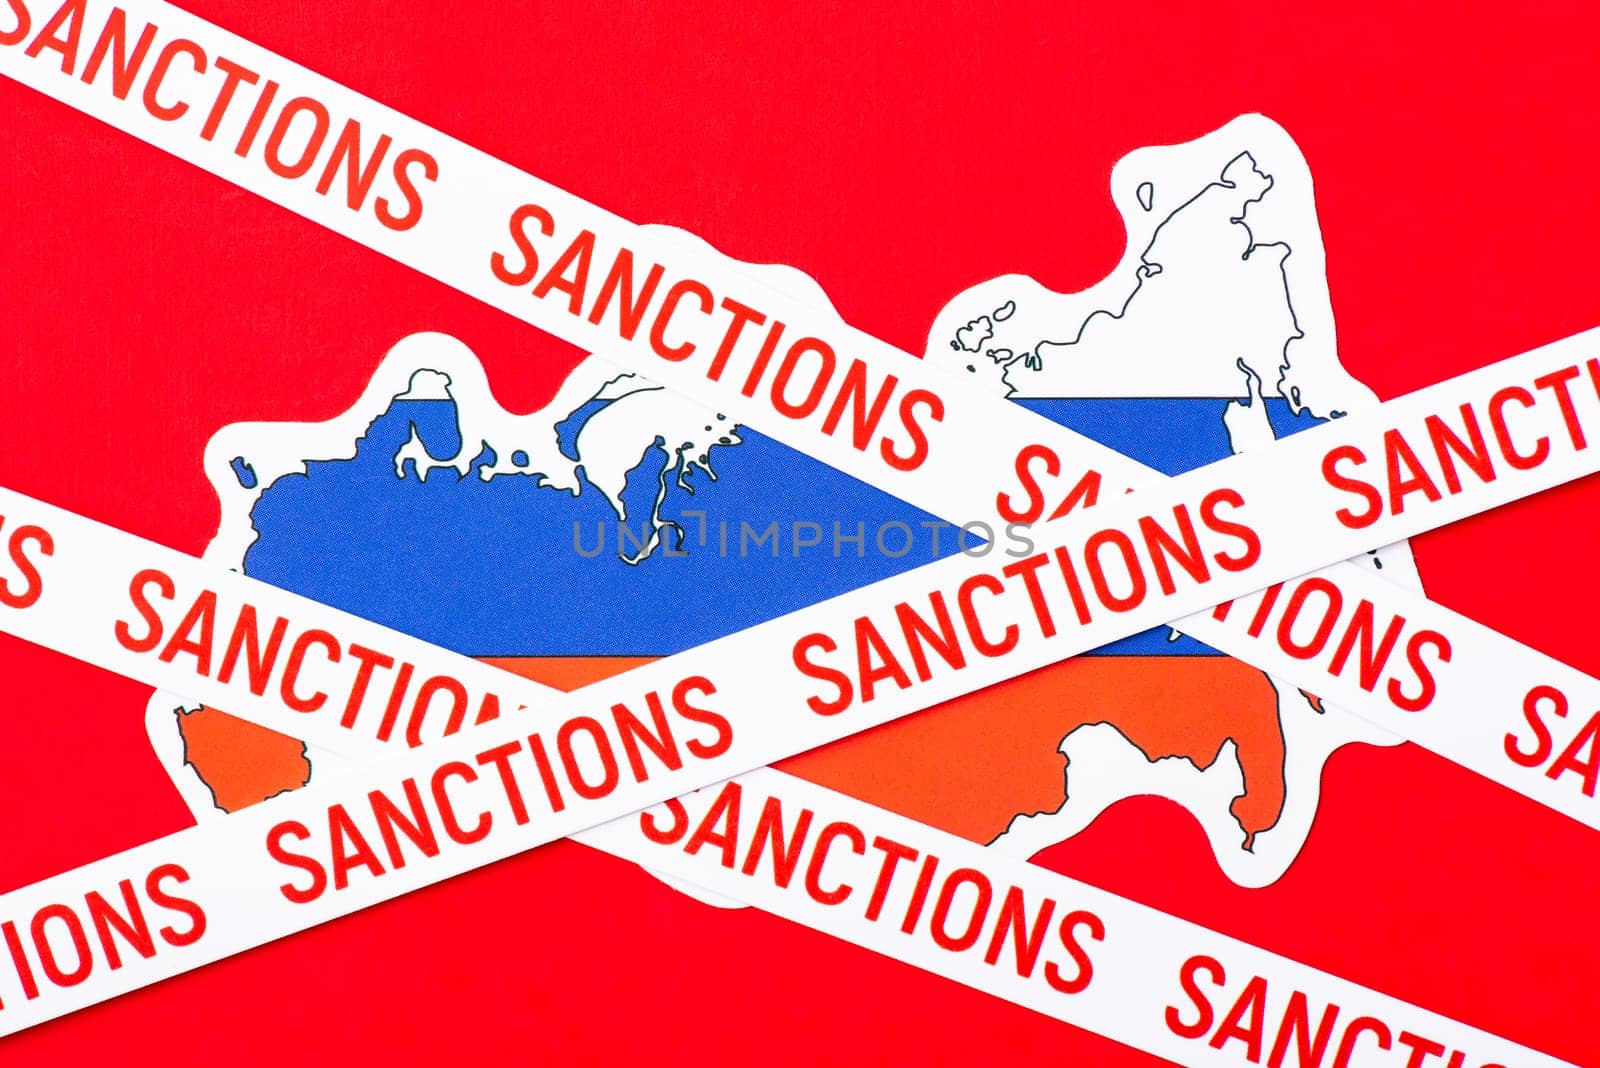 Sanctions on Russia because of Ukraine invasion